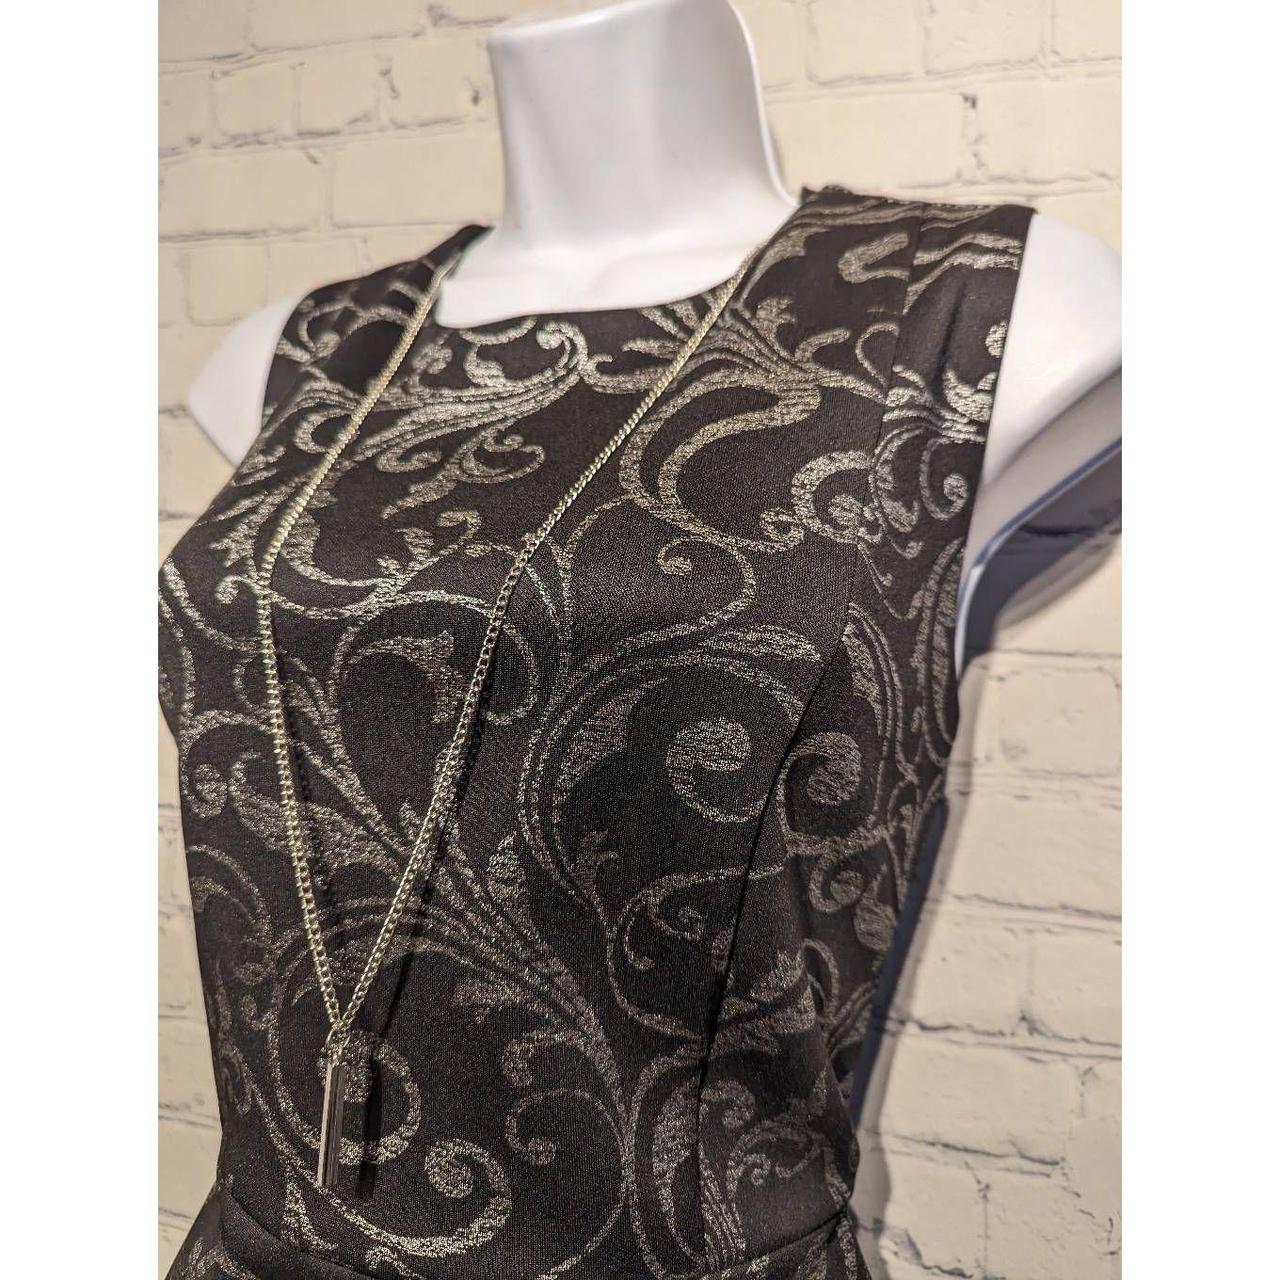 Enfocus Studio Women's Black and Silver Dress (3)